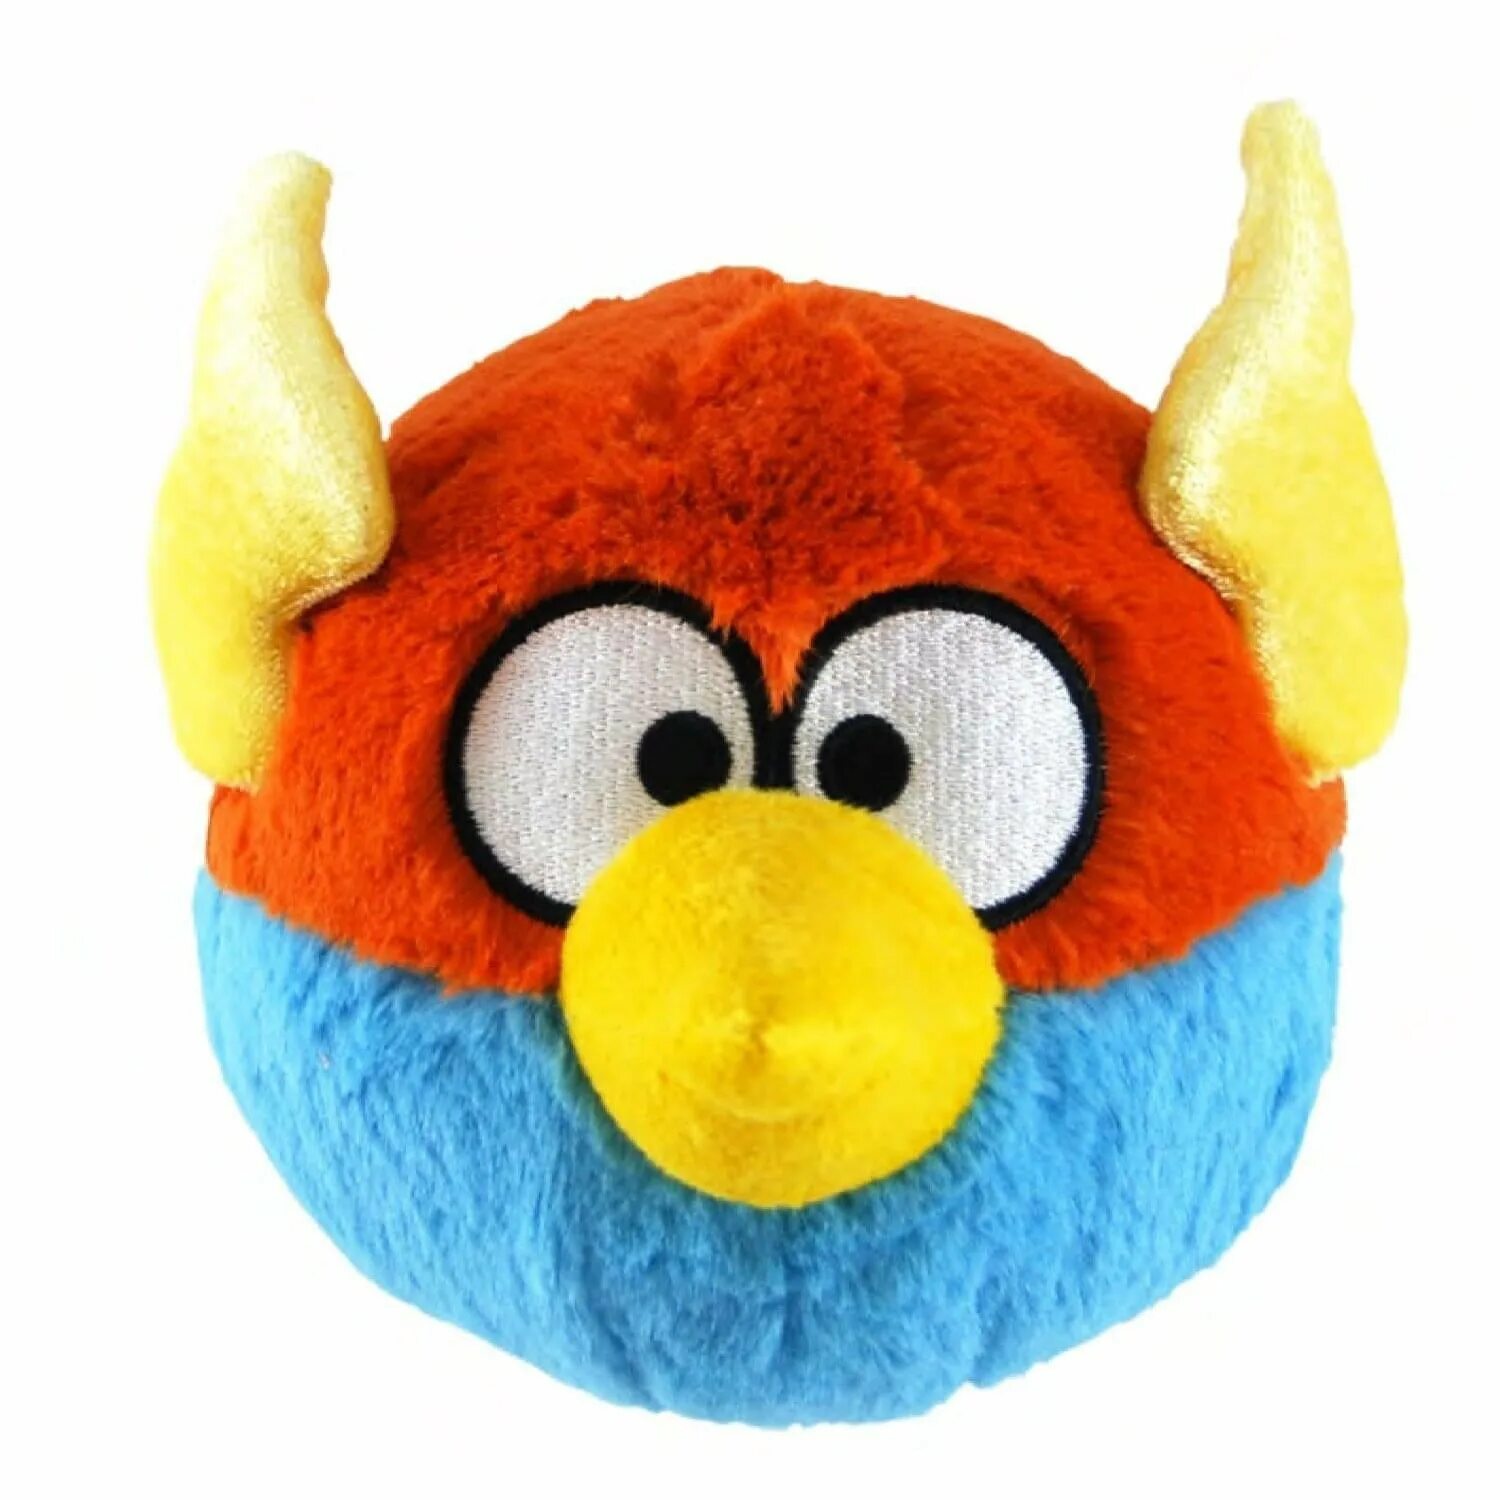 Angry Birds Space Plush Toys. Angry Birds Plush Toys. Angry Birds Space игрушки мягкие. Angry Birds плюшевые игрушки Теренс. Мягкие игрушки энгри бердз